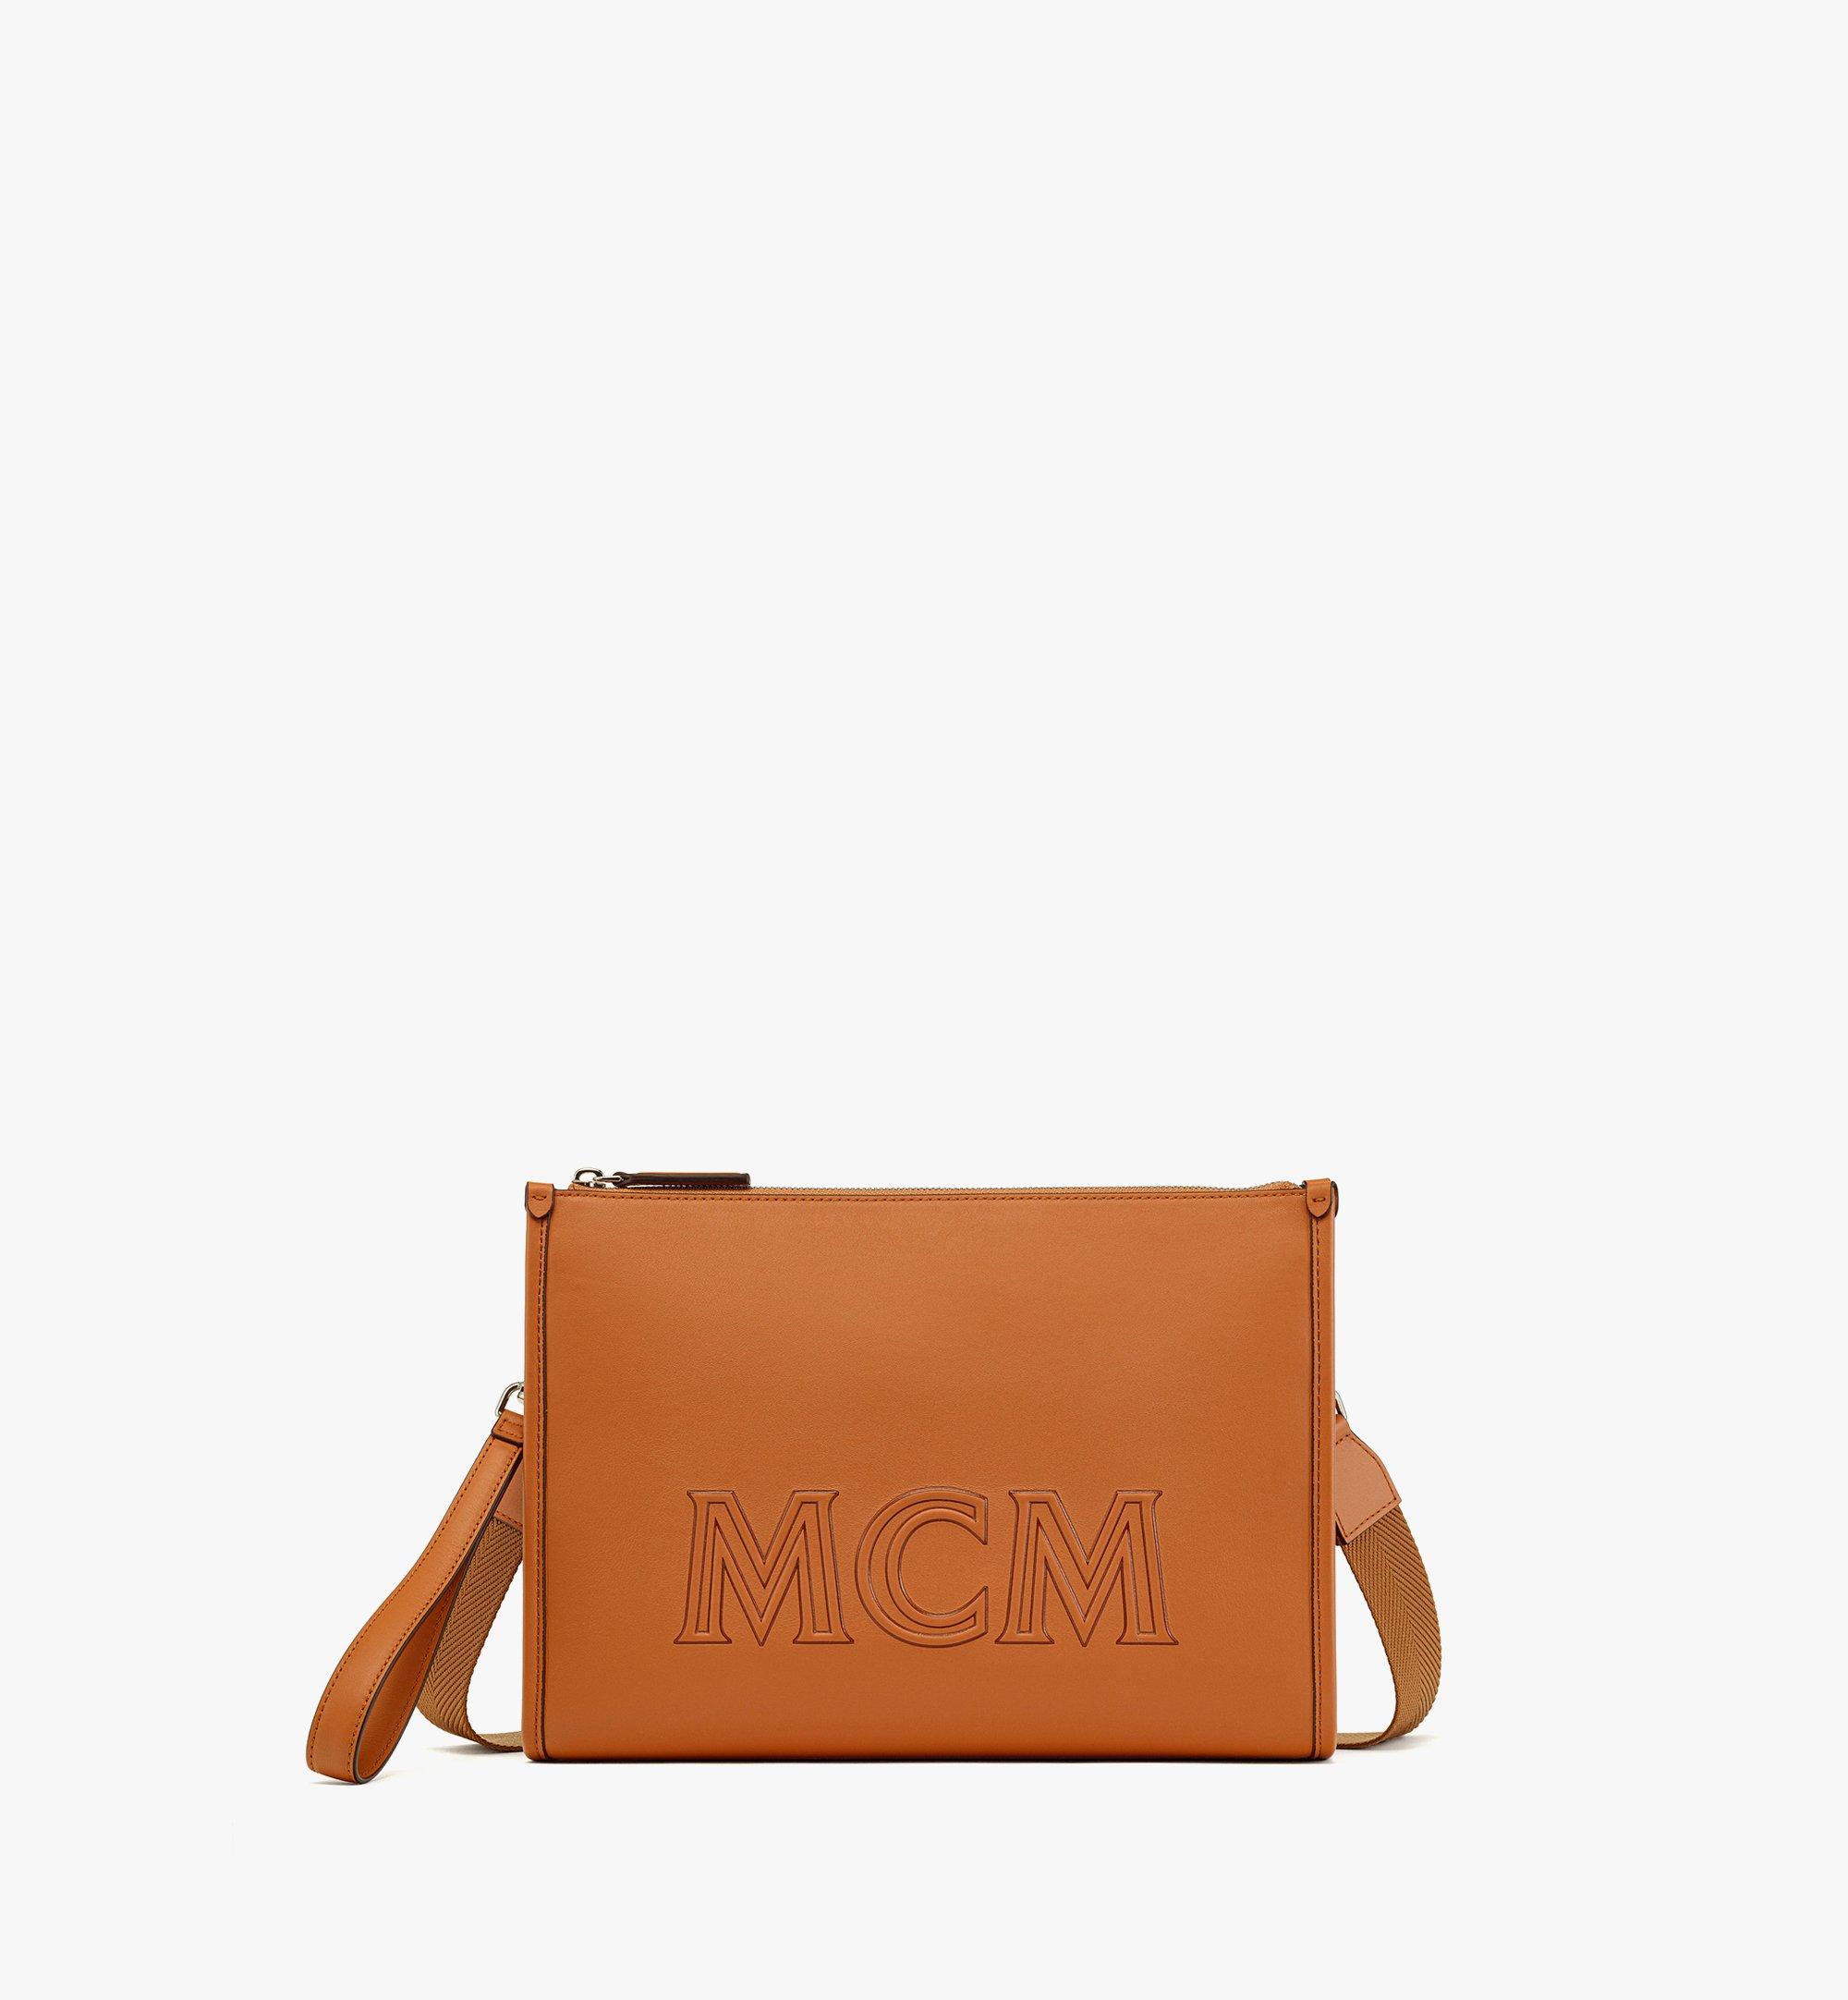 Buy MCM Cross Body & Shoulder Bags for sale online